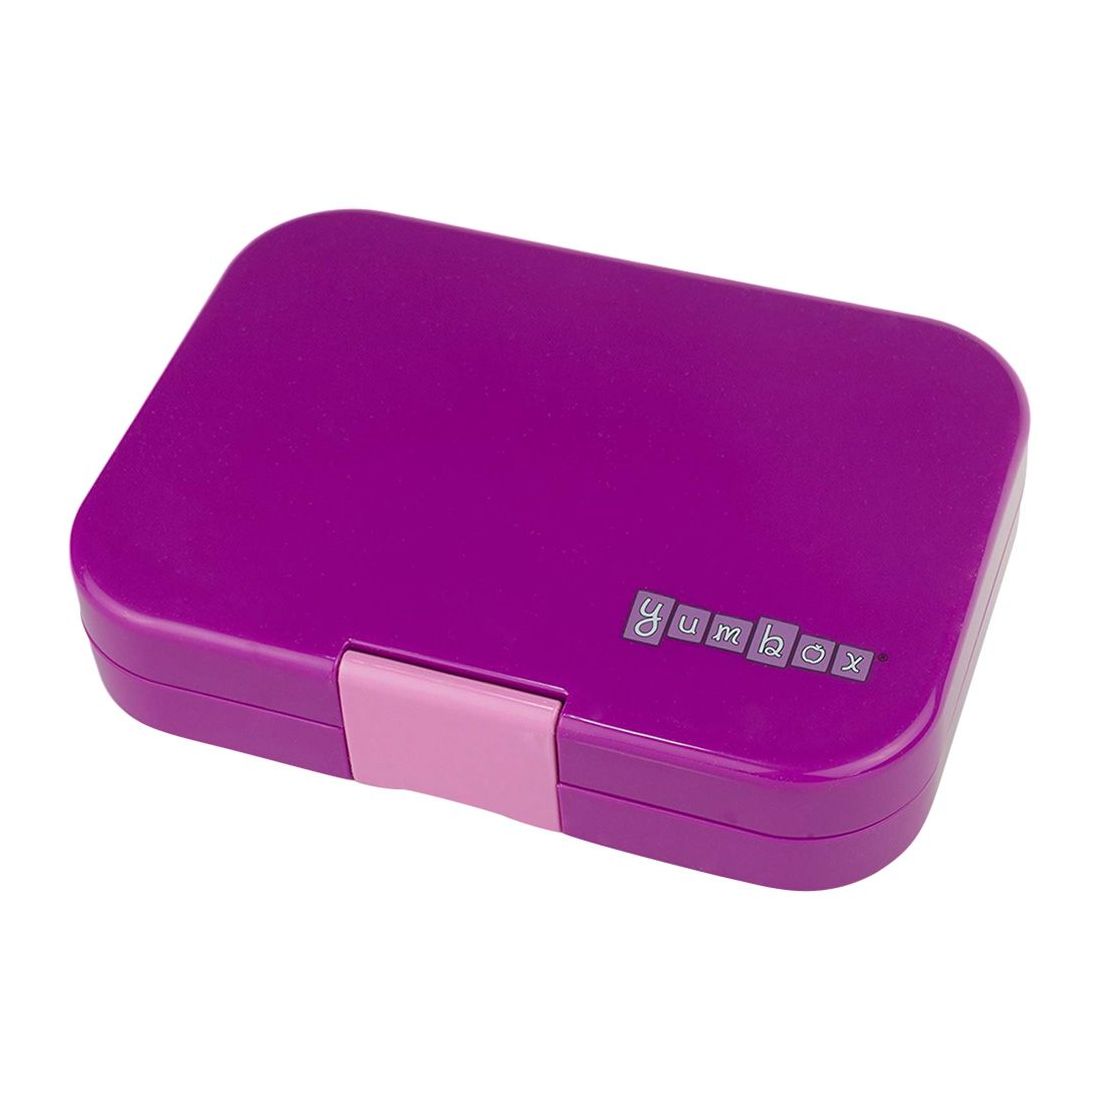 Yumbox Bijoux Purple Lunchbox (4 Compartments)